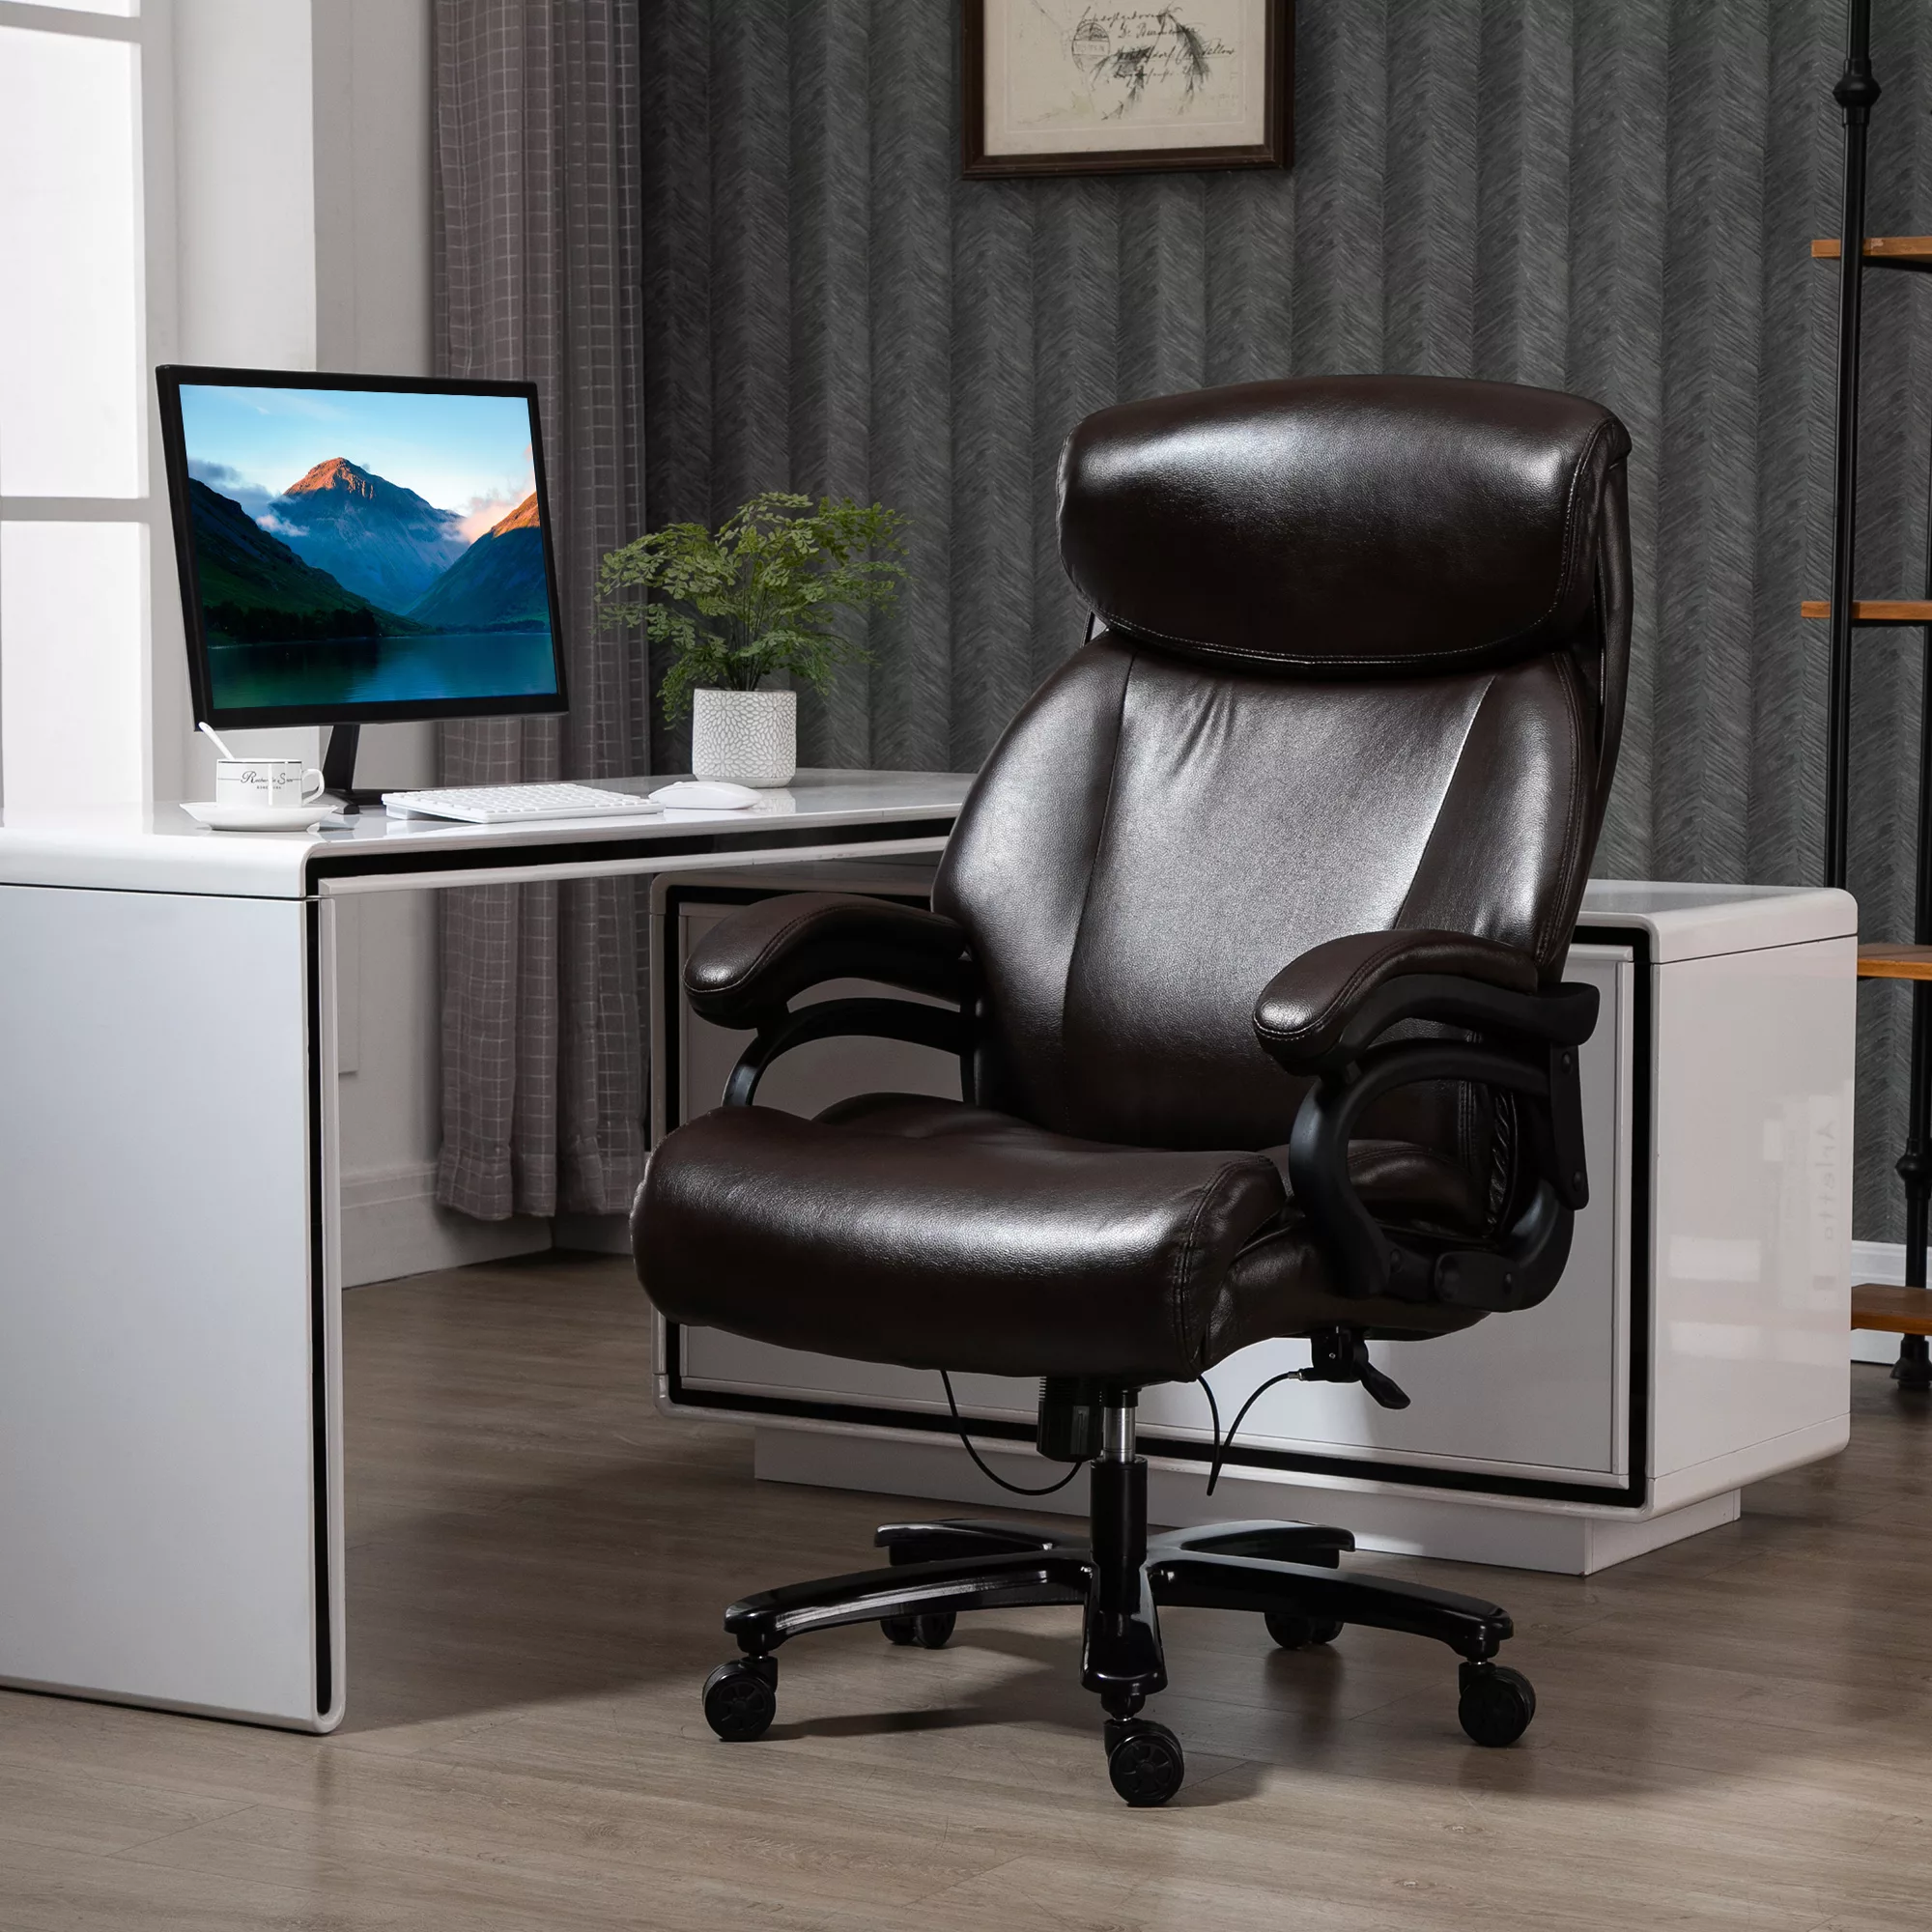 Vinsetto Bürostuhl Chefsessel Gaming Stuhl Drehstuhl Wippfunktion Dicke Pol günstig online kaufen